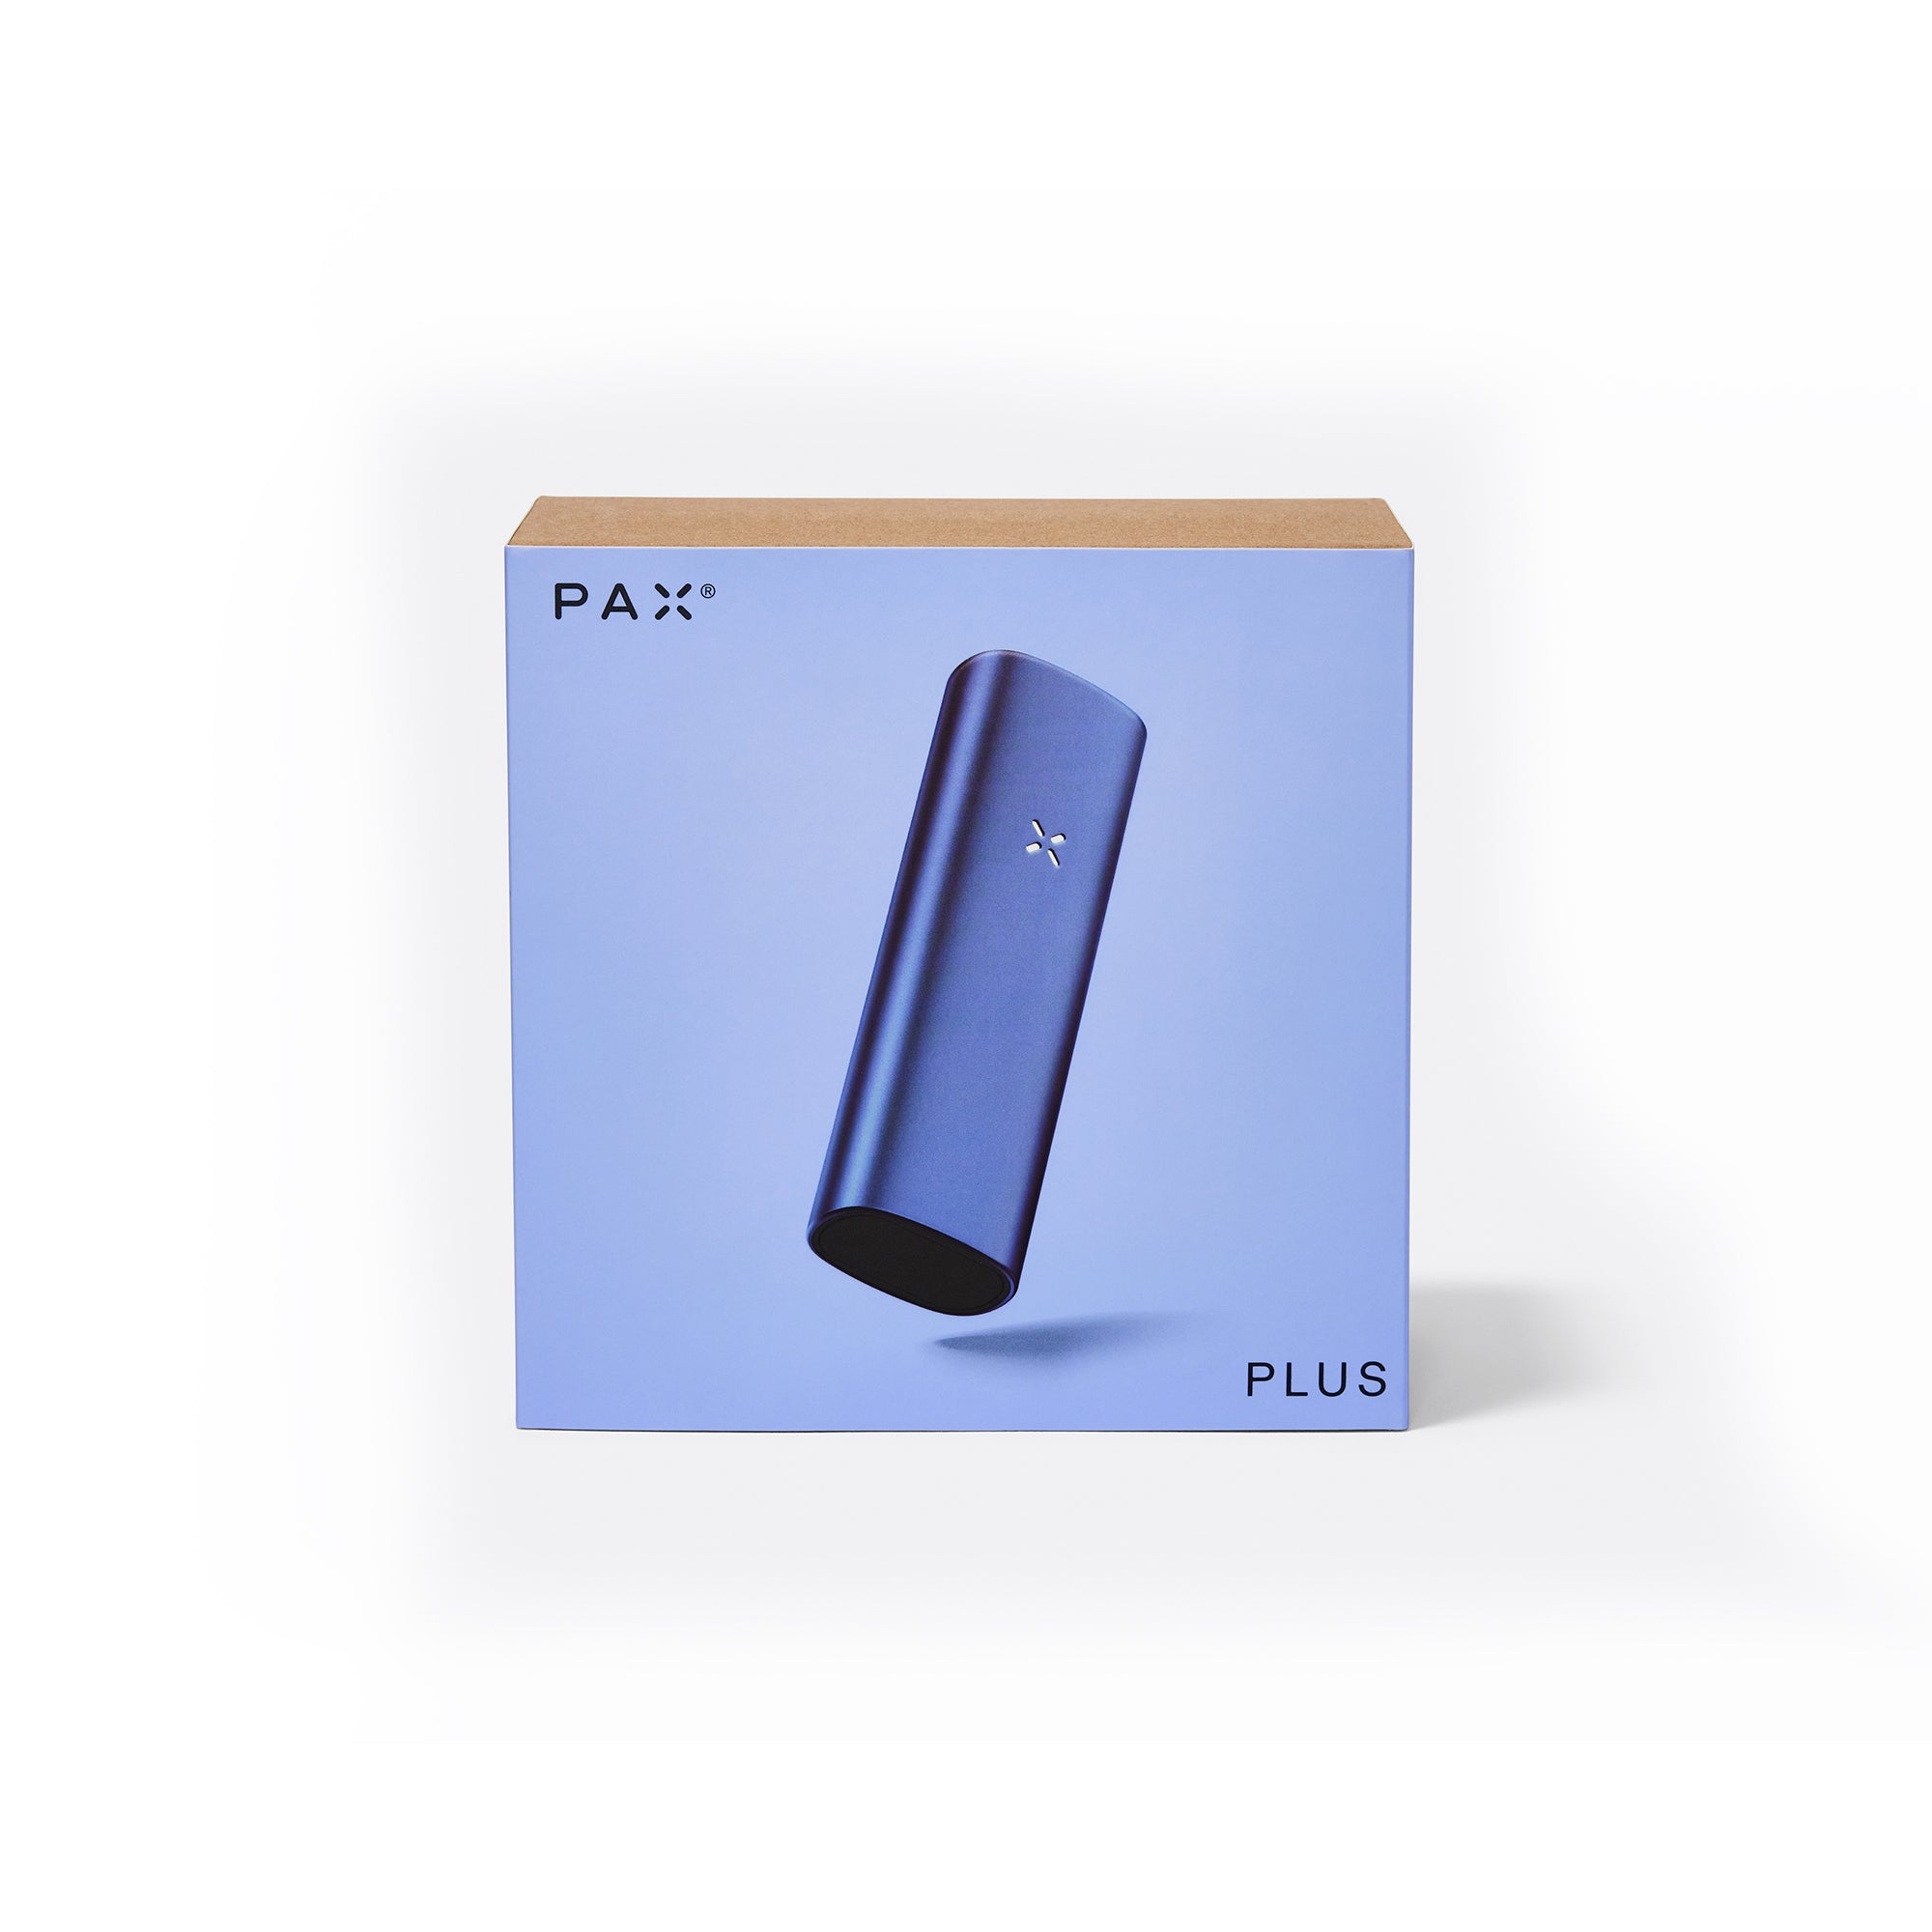 PAX Plus vaporizer